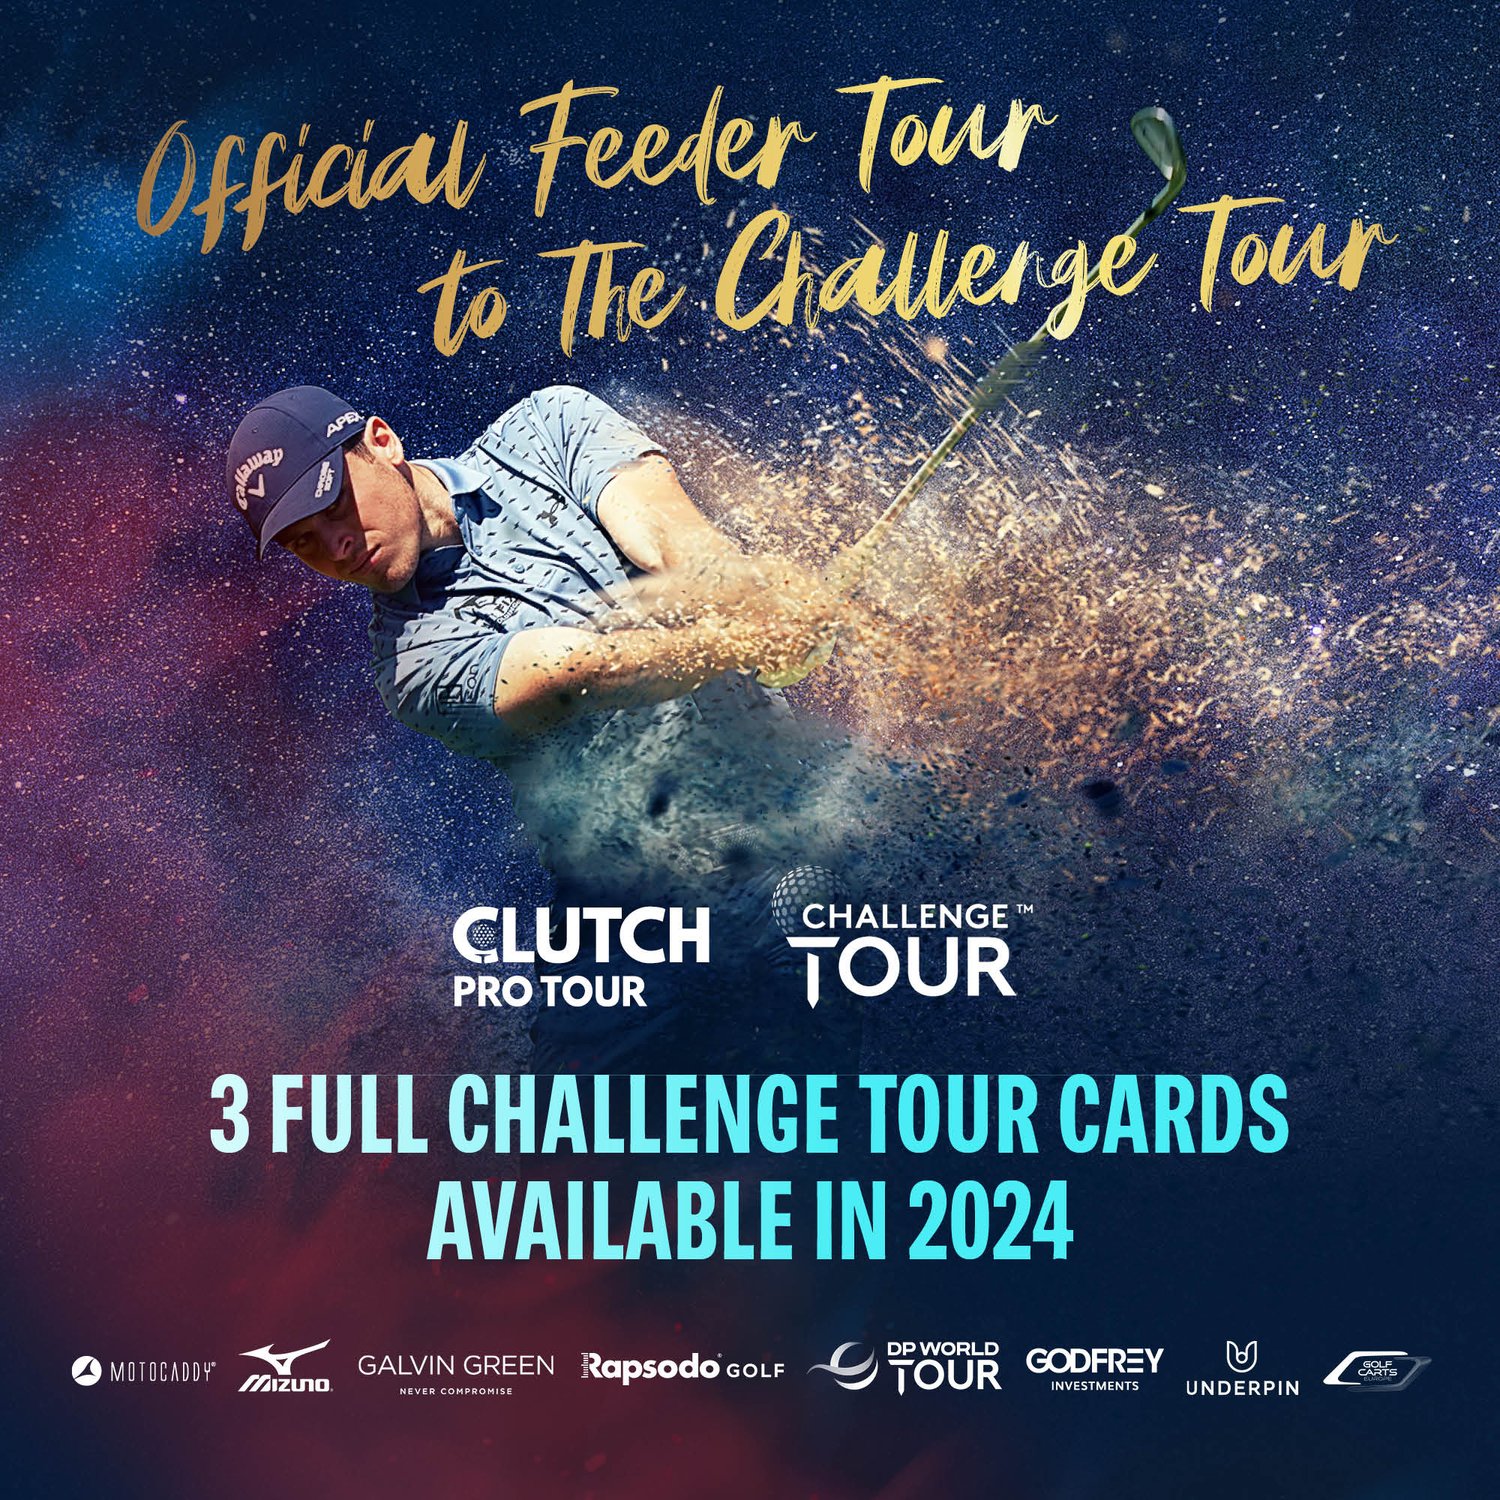 clutch pro tour schedule